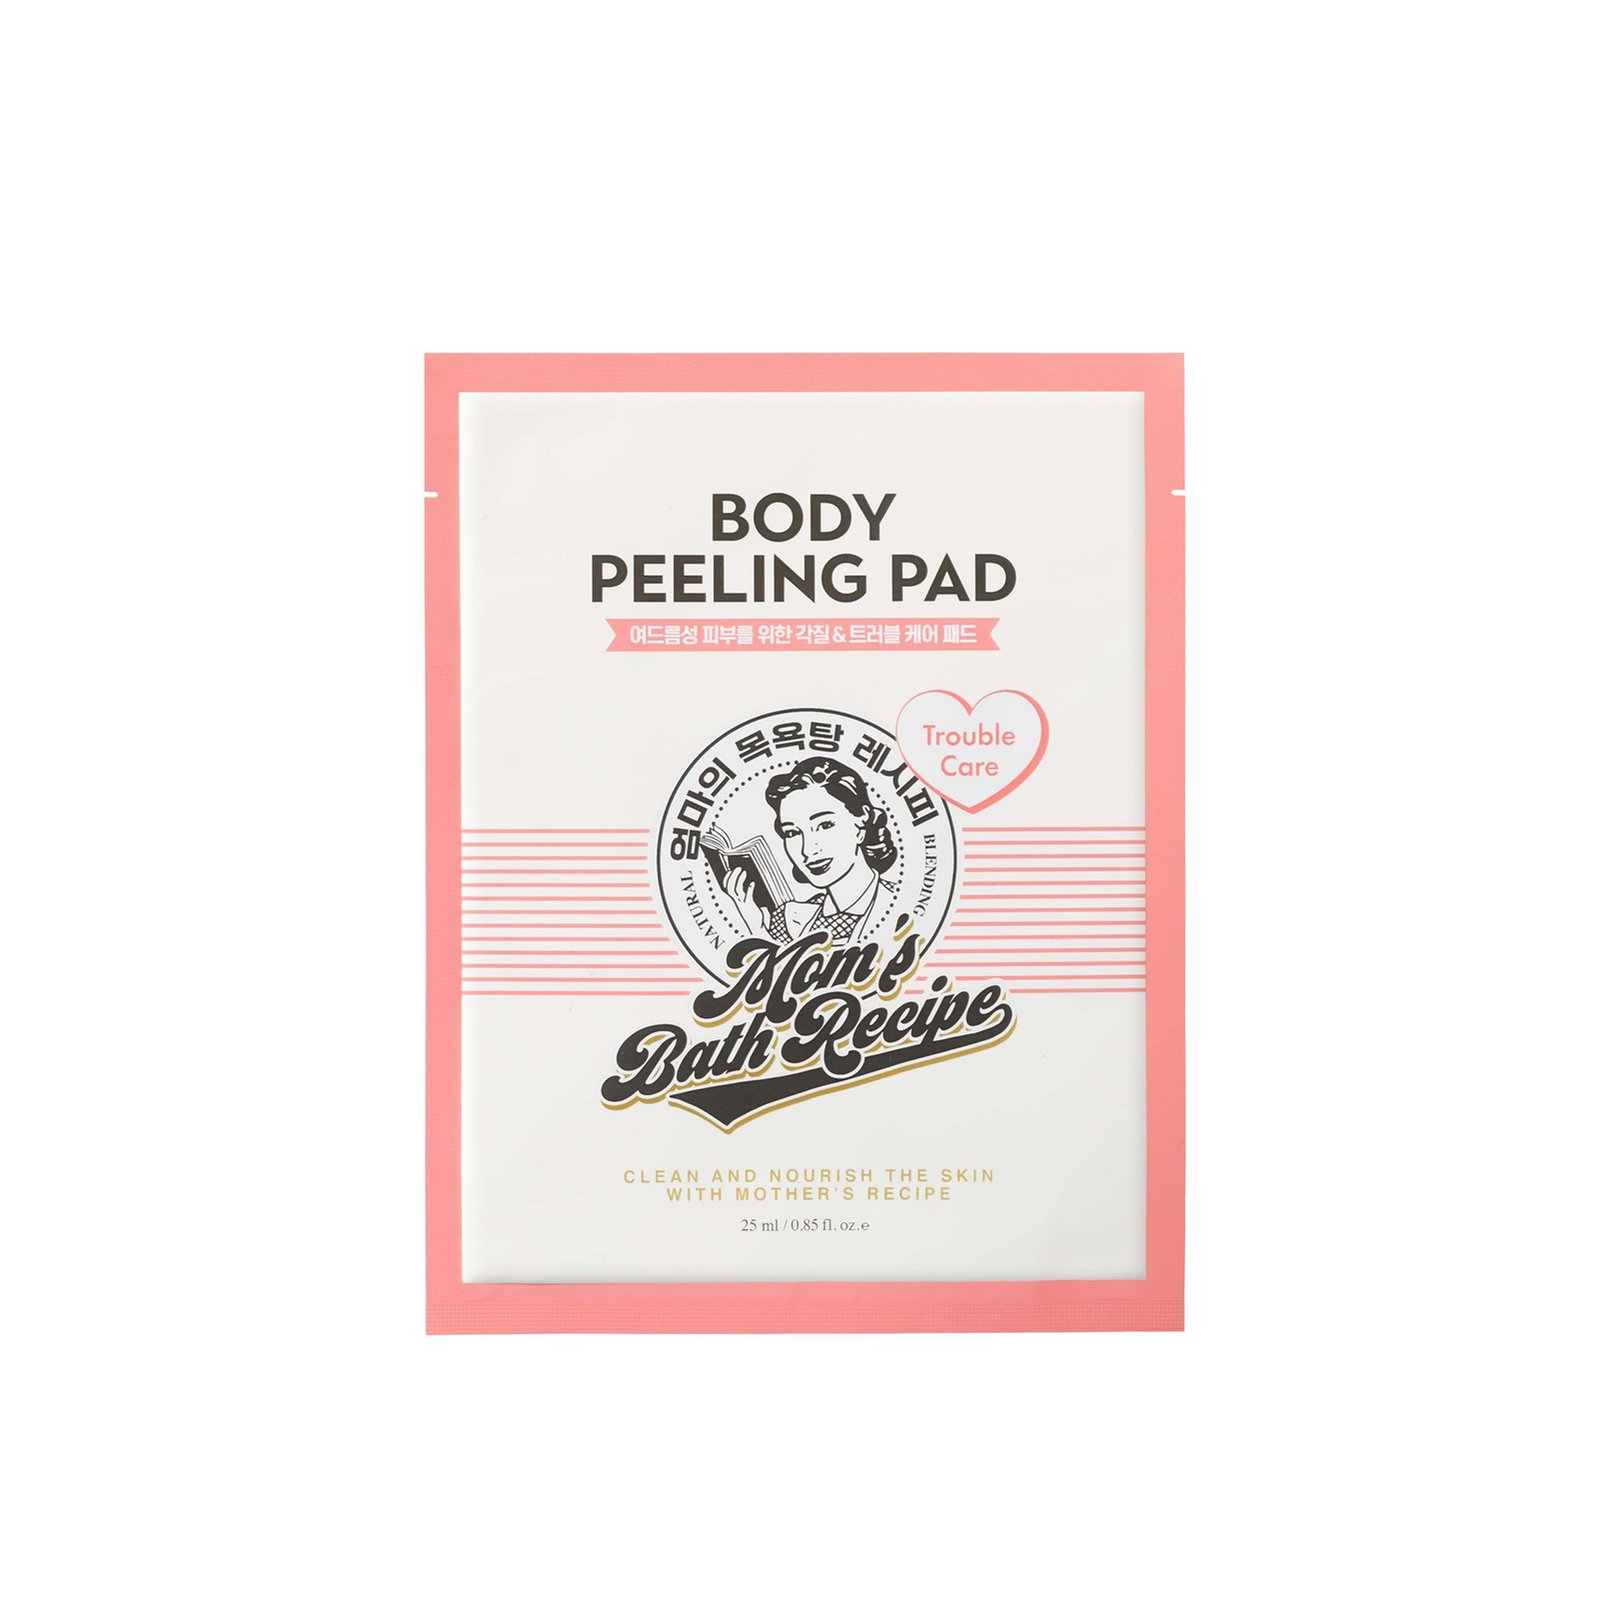 Mom's Bath Recipe Body Peeling Pad Trouble Care 25ml (0.85 fl oz)